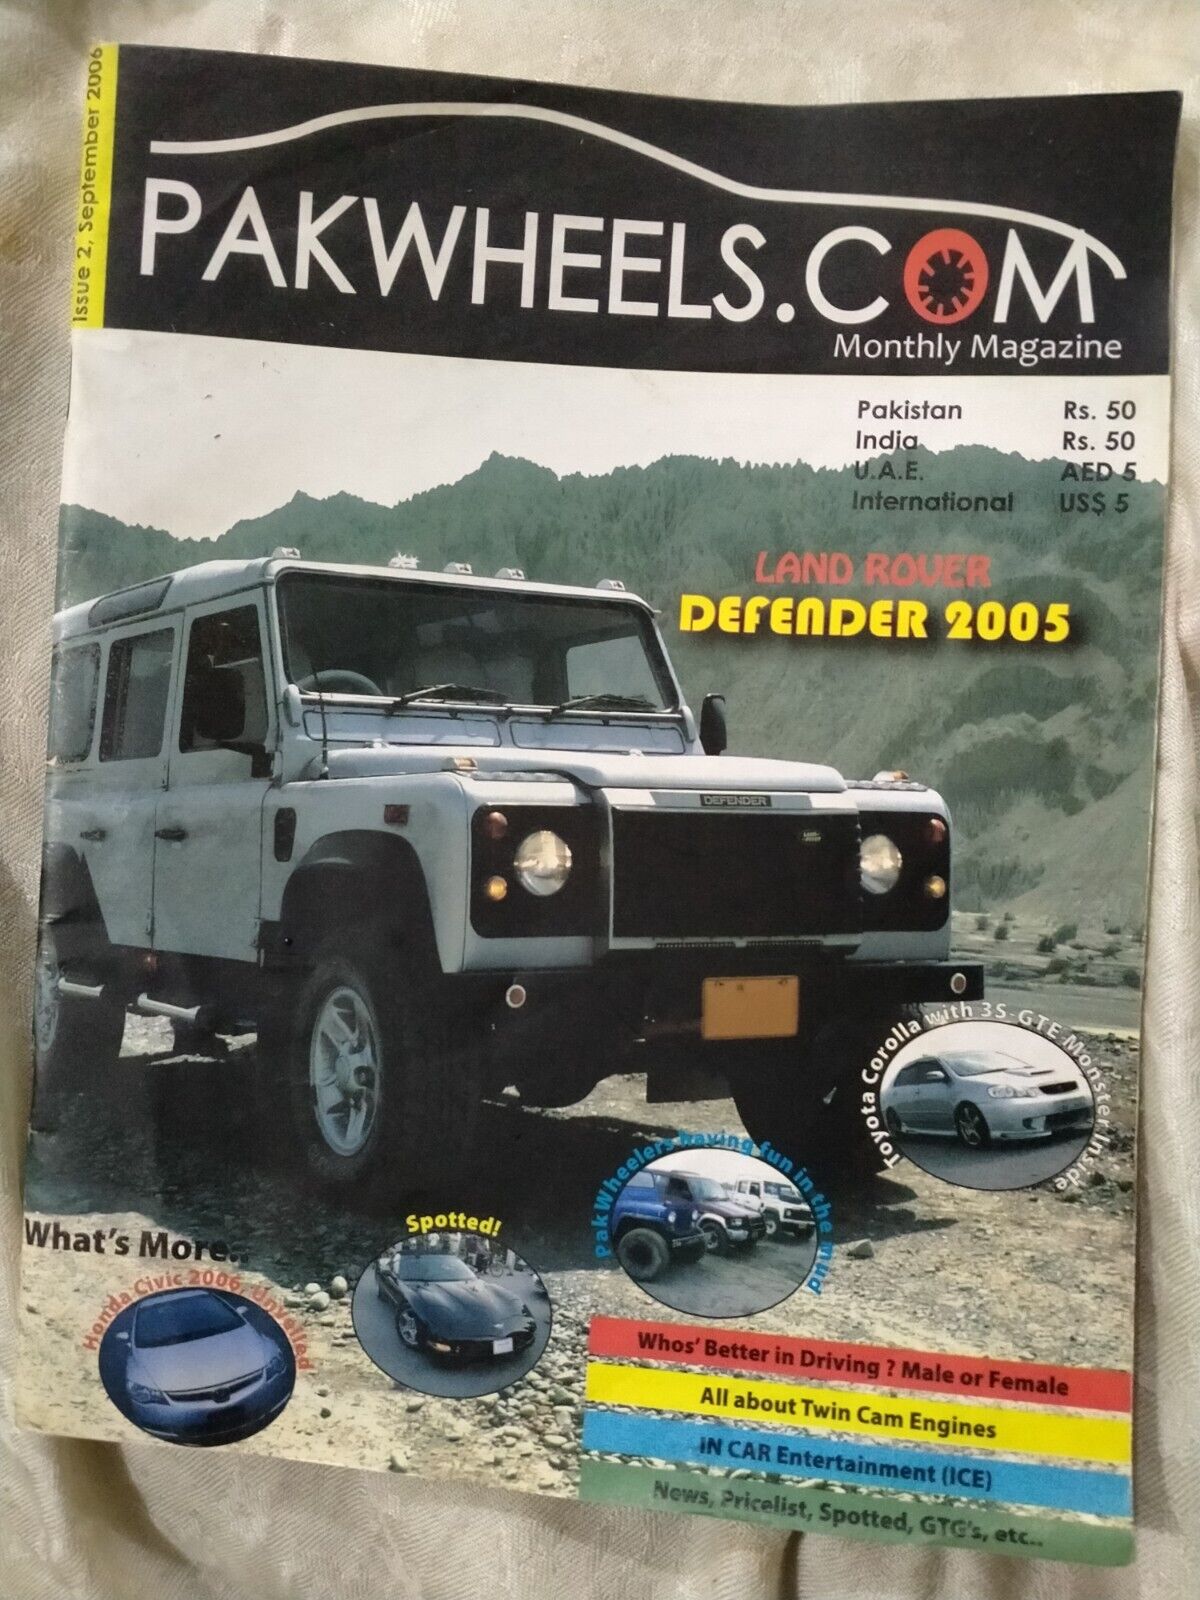 Original 2006 PakWheels Magazine September Issue- Rare Find for Auto Enthusiasts